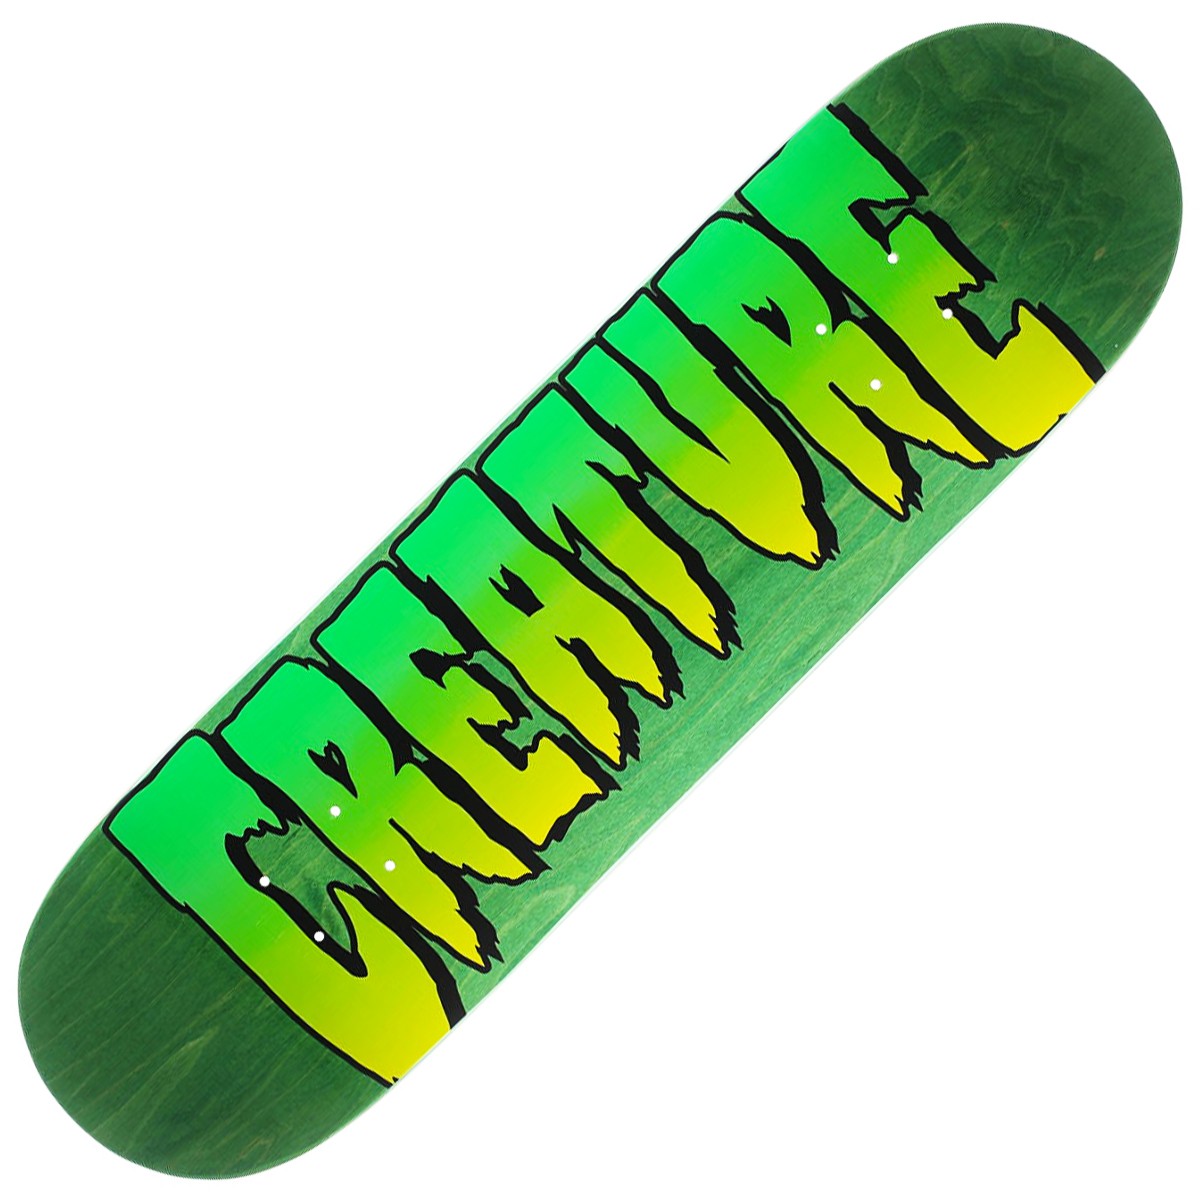 CREATURE “Stumps” skateboard deck